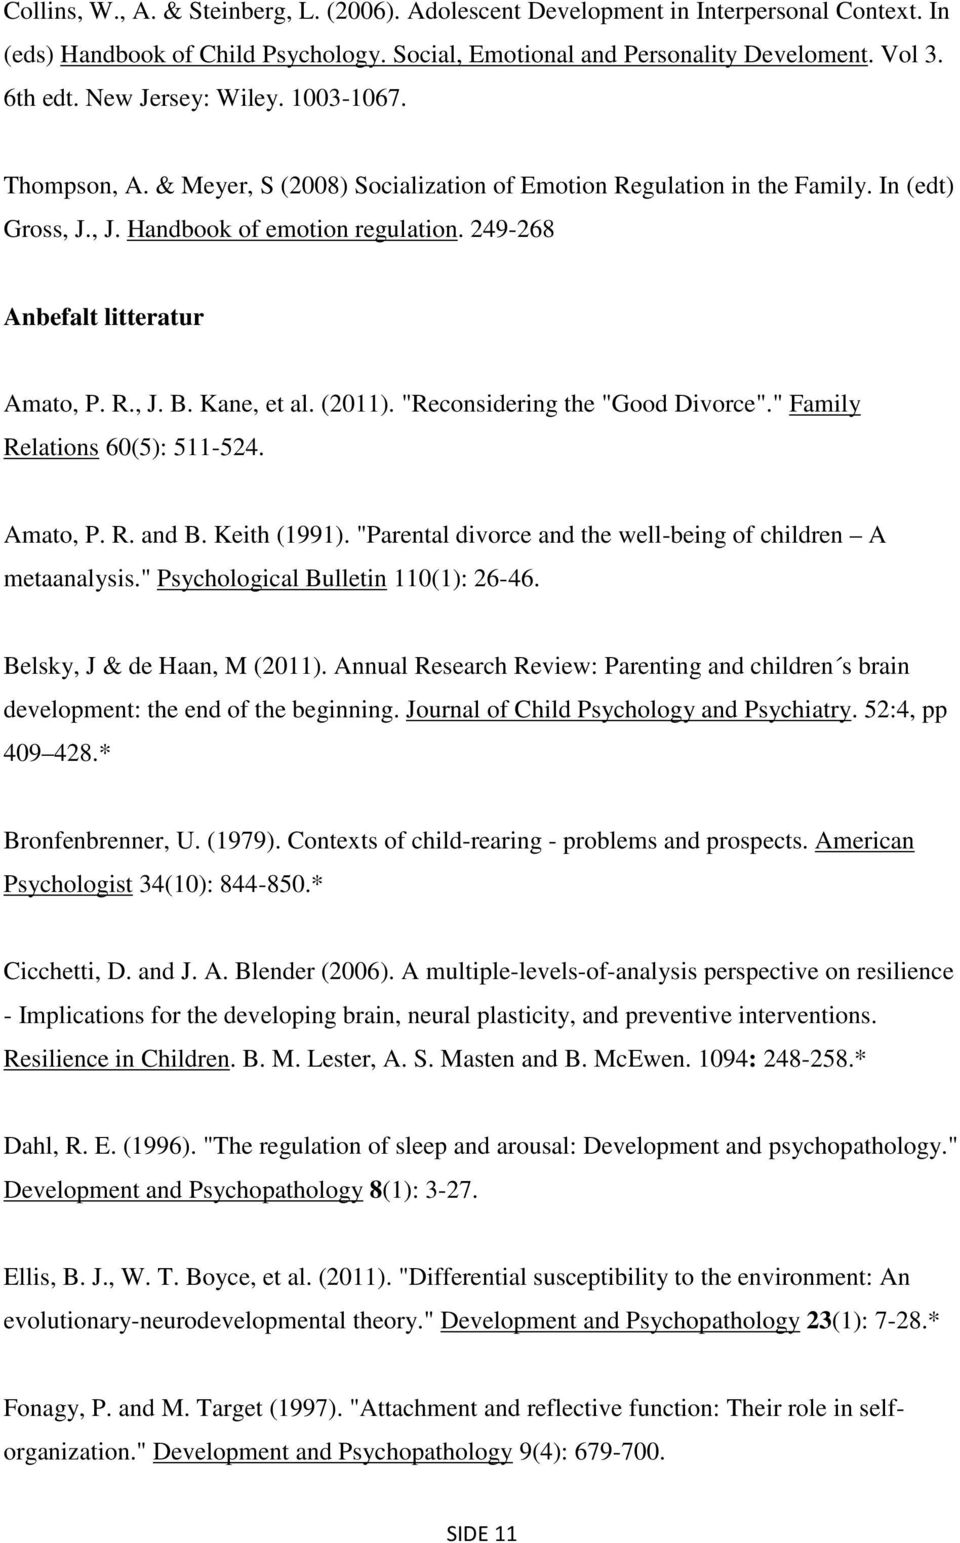 249-268 Anbefalt litteratur Amato, P. R., J. B. Kane, et al. (2011). "Reconsidering the "Good Divorce"." Family Relations 60(5): 511-524. Amato, P. R. and B. Keith (1991).